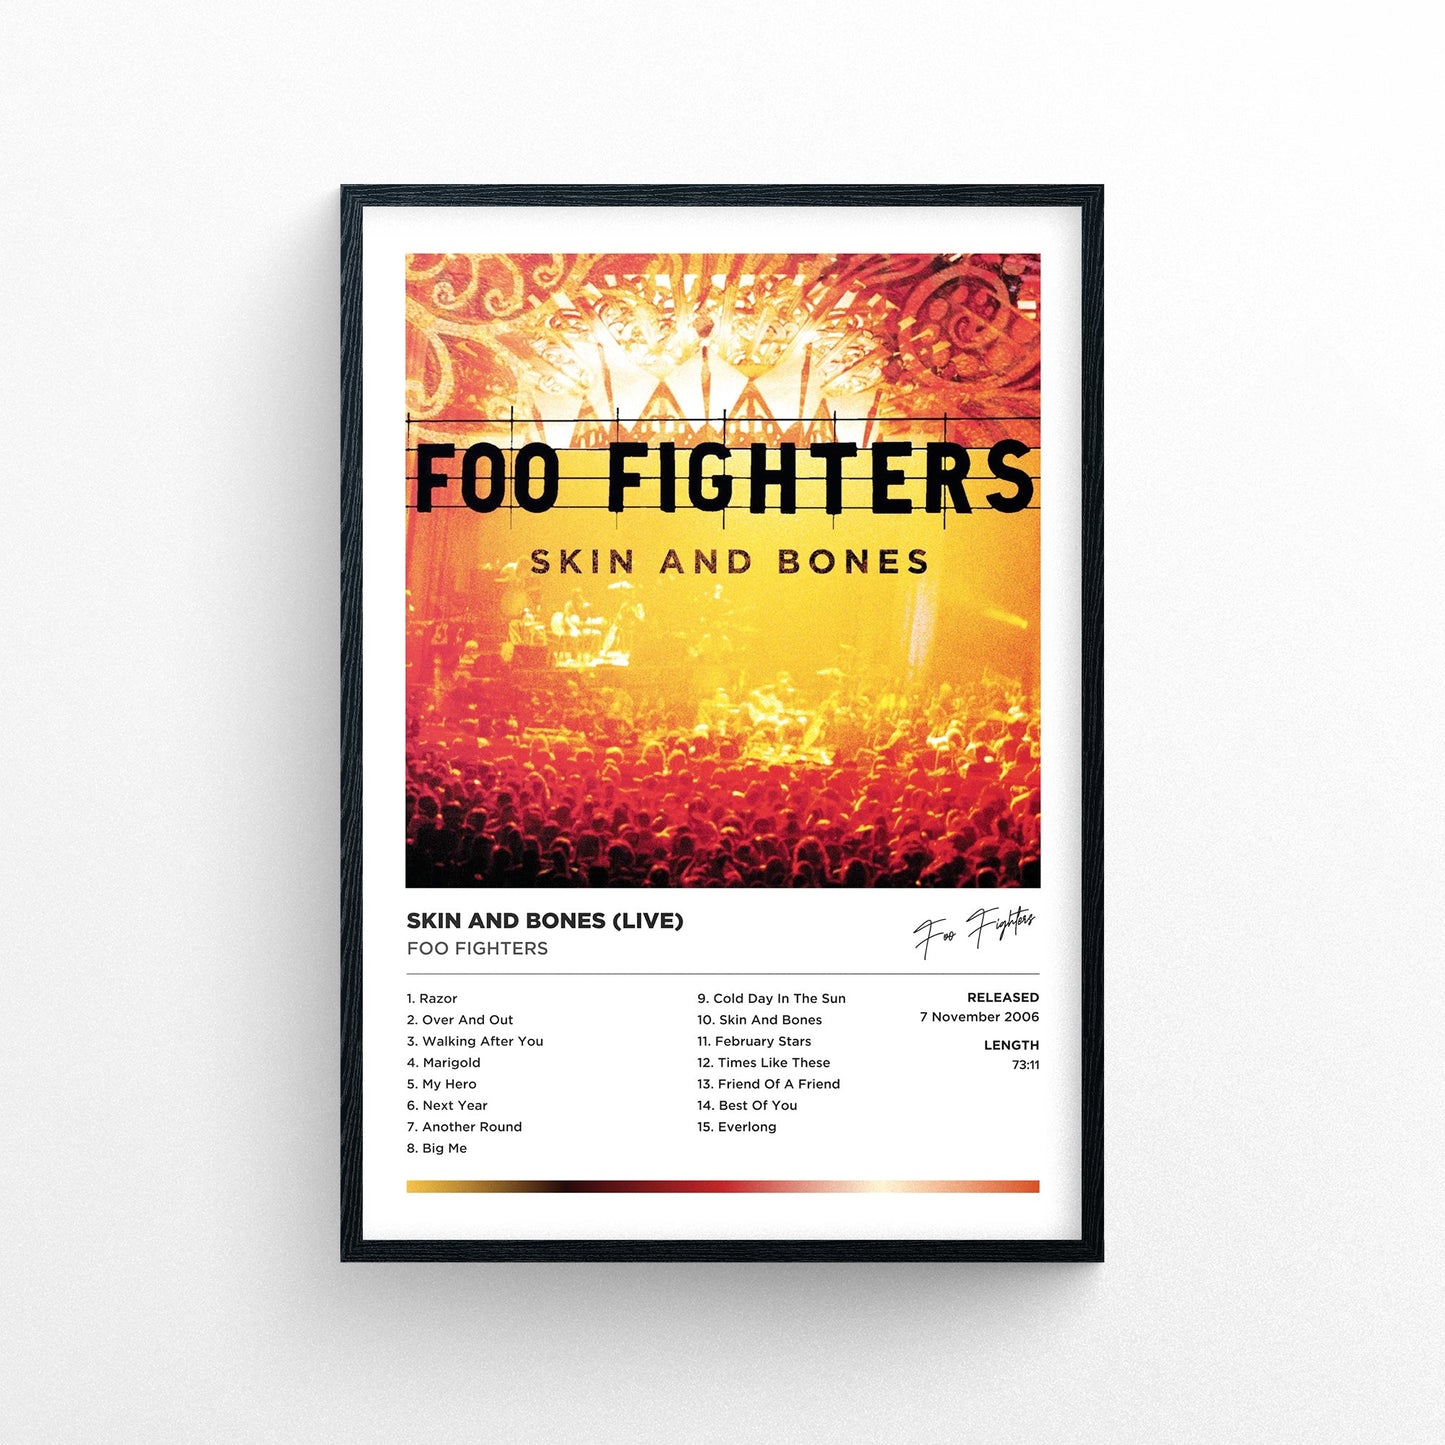 Foo Fighters - Skin And Bones (Live) Framed Poster Print | Polaroid Style | Album Cover Artwork